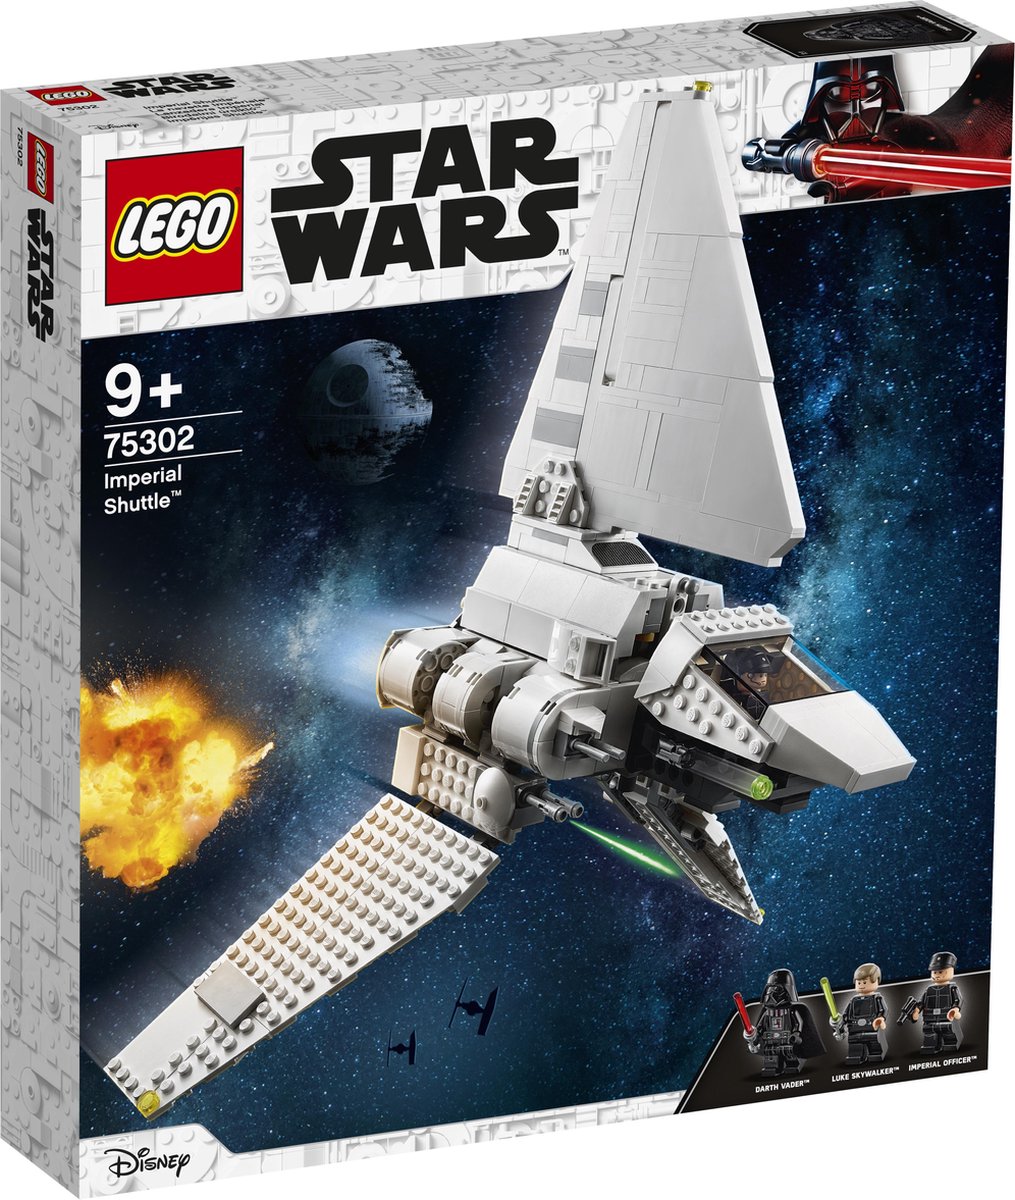   Star Wars Imperial Shuttle - 75302